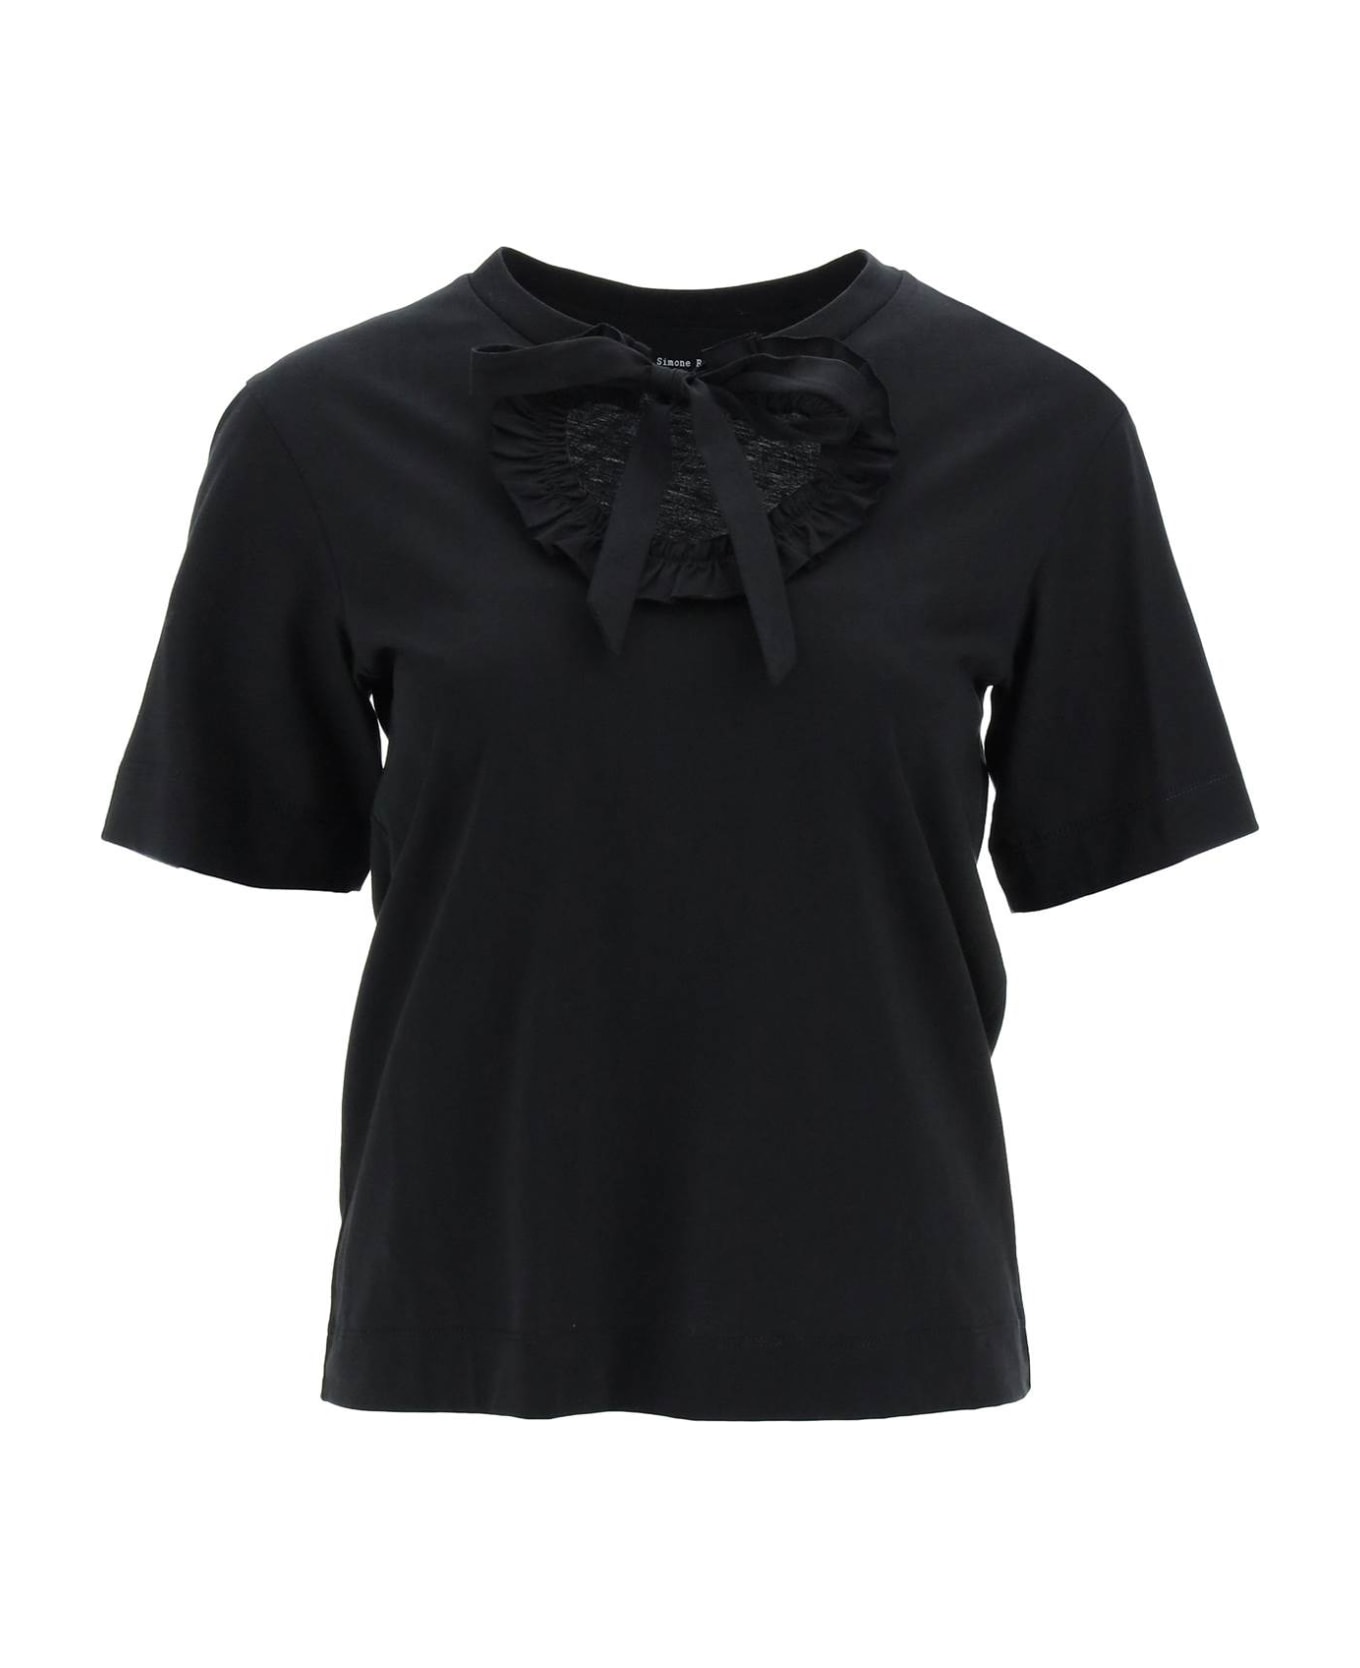 Simone Rocha T-shirt With Heart-shaped Cut-out - BLACK (Black)